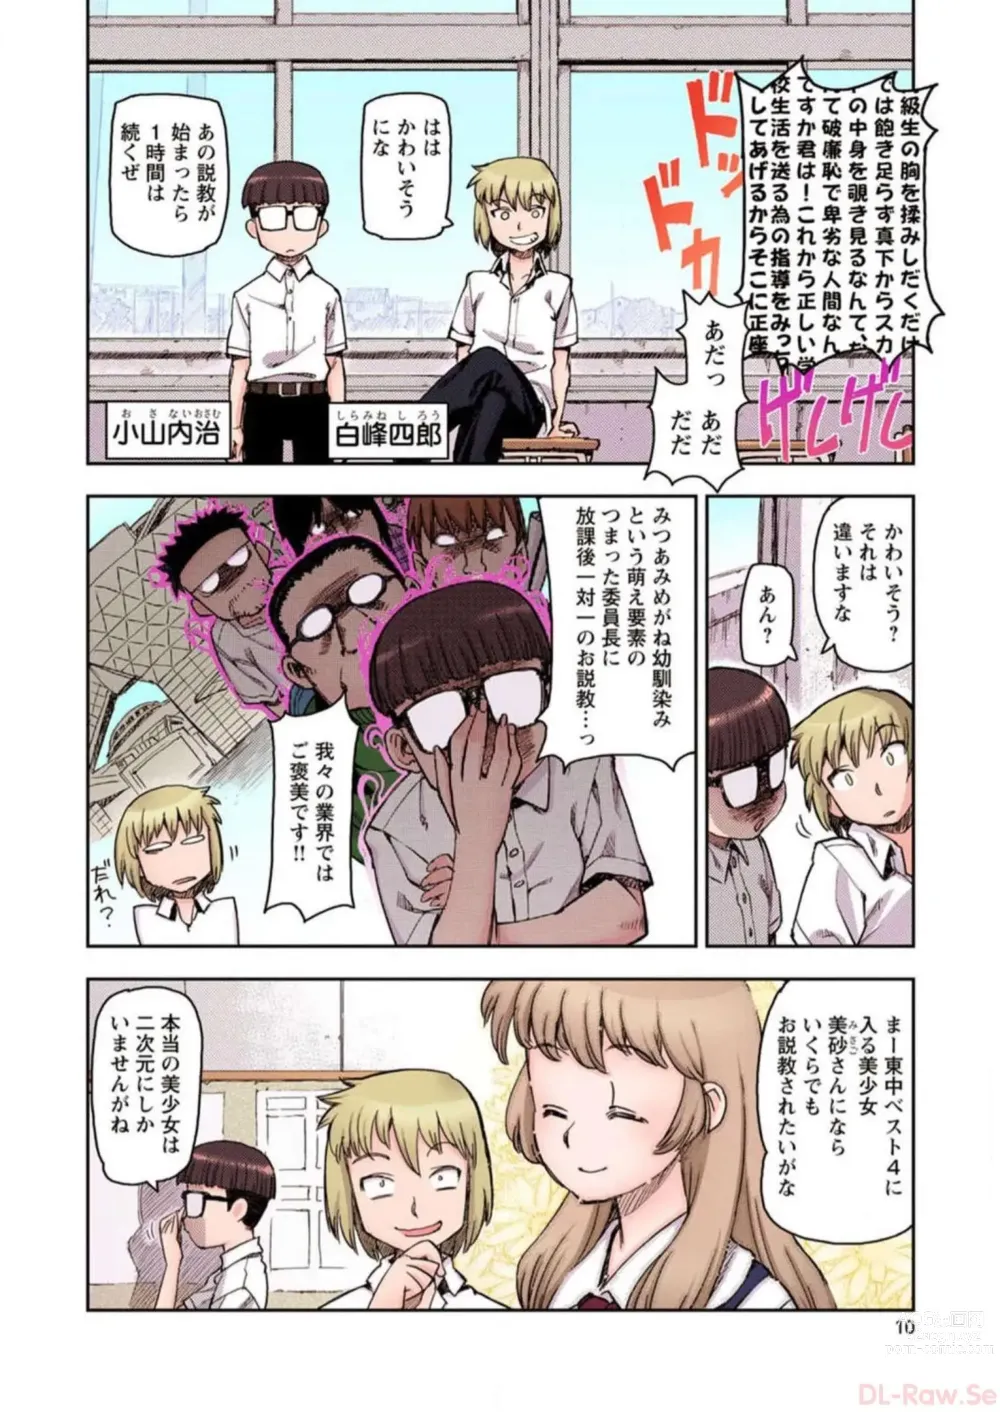 Page 12 of manga Tsugumomo Digital Colored Comics V1